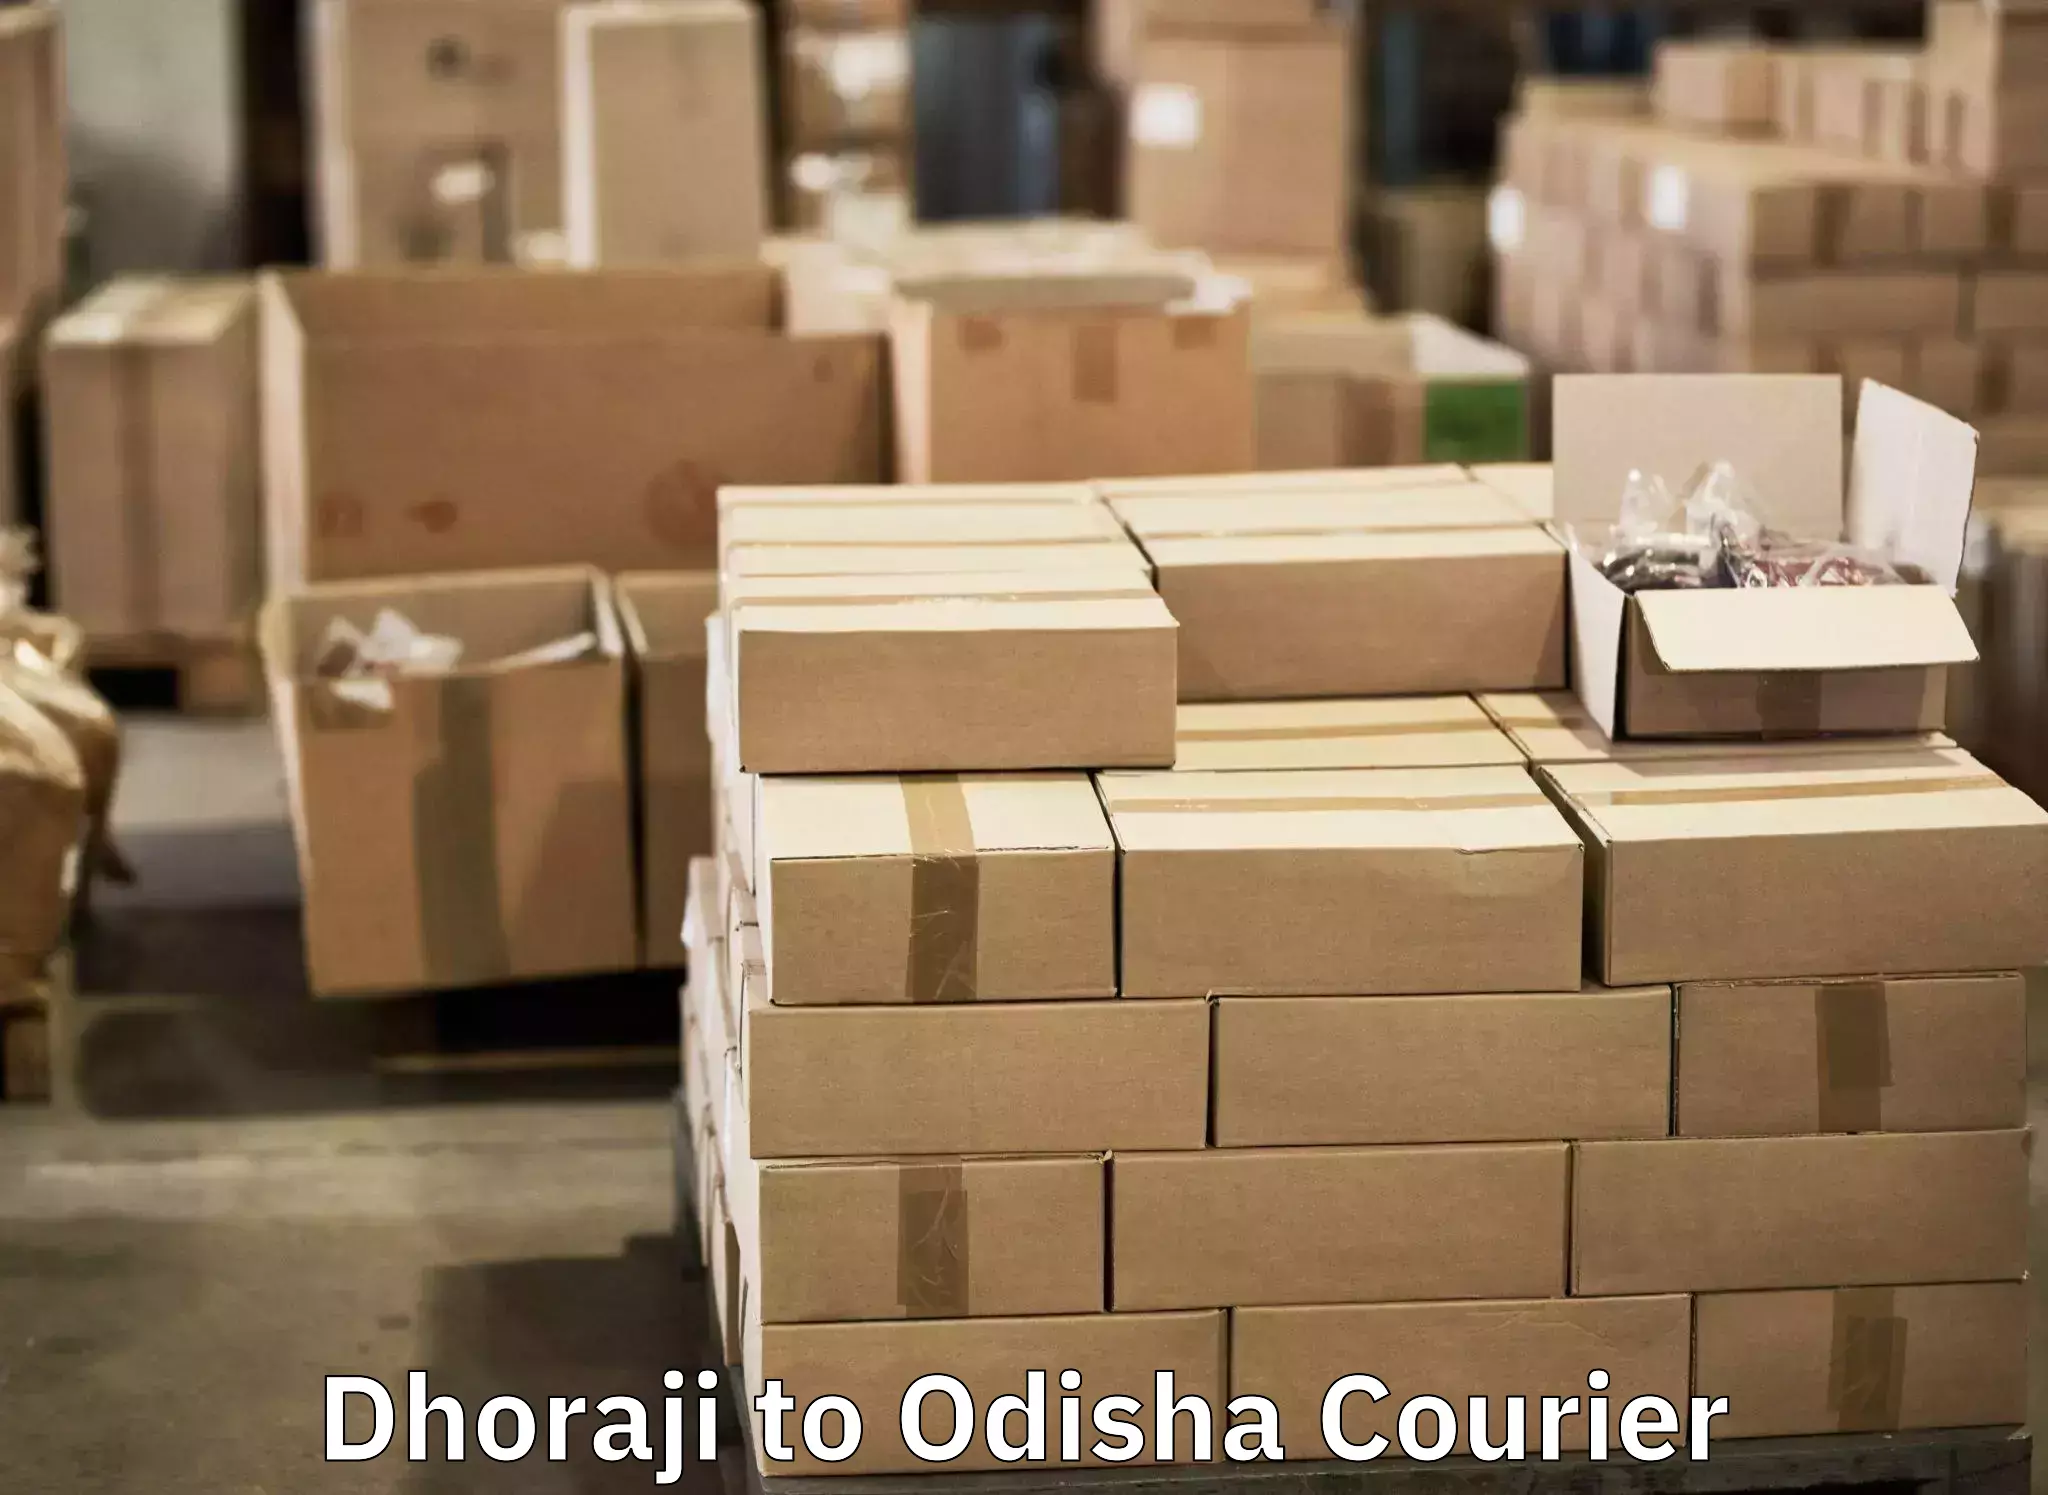 Baggage transport network Dhoraji to Dandisahi